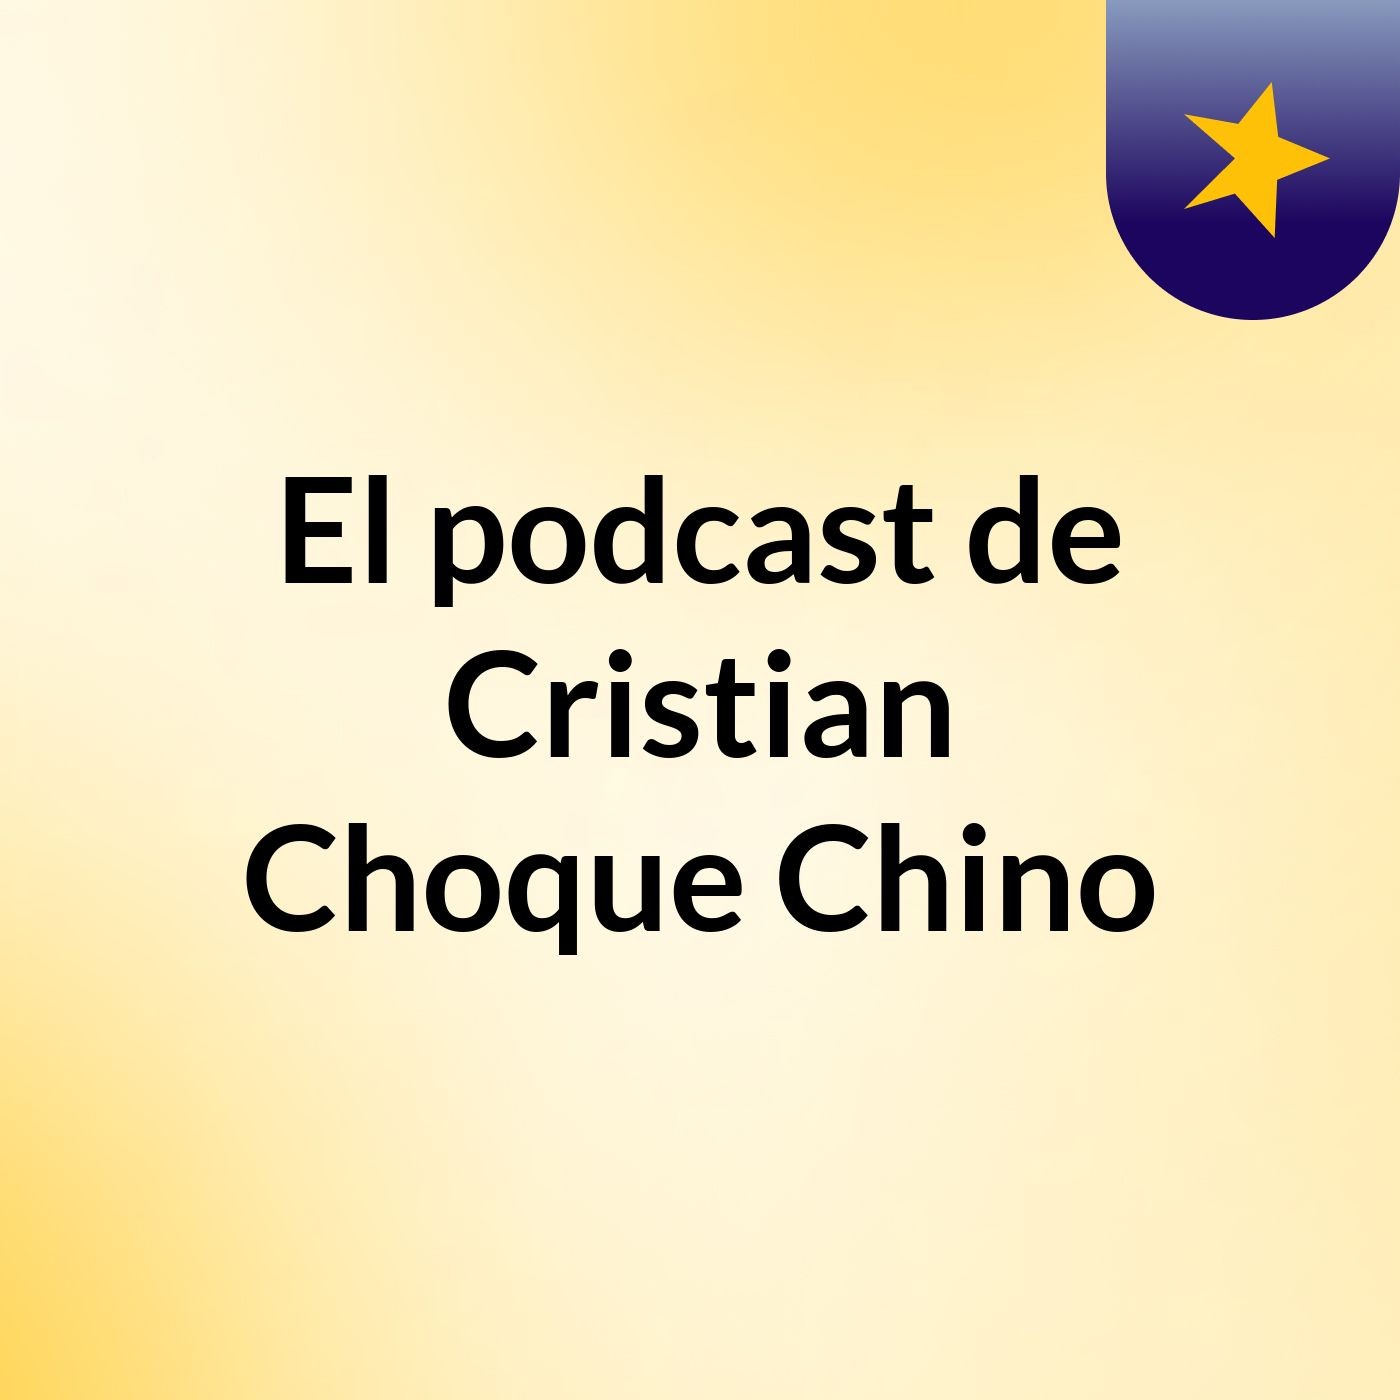 El podcast de Cristian Choque Chino